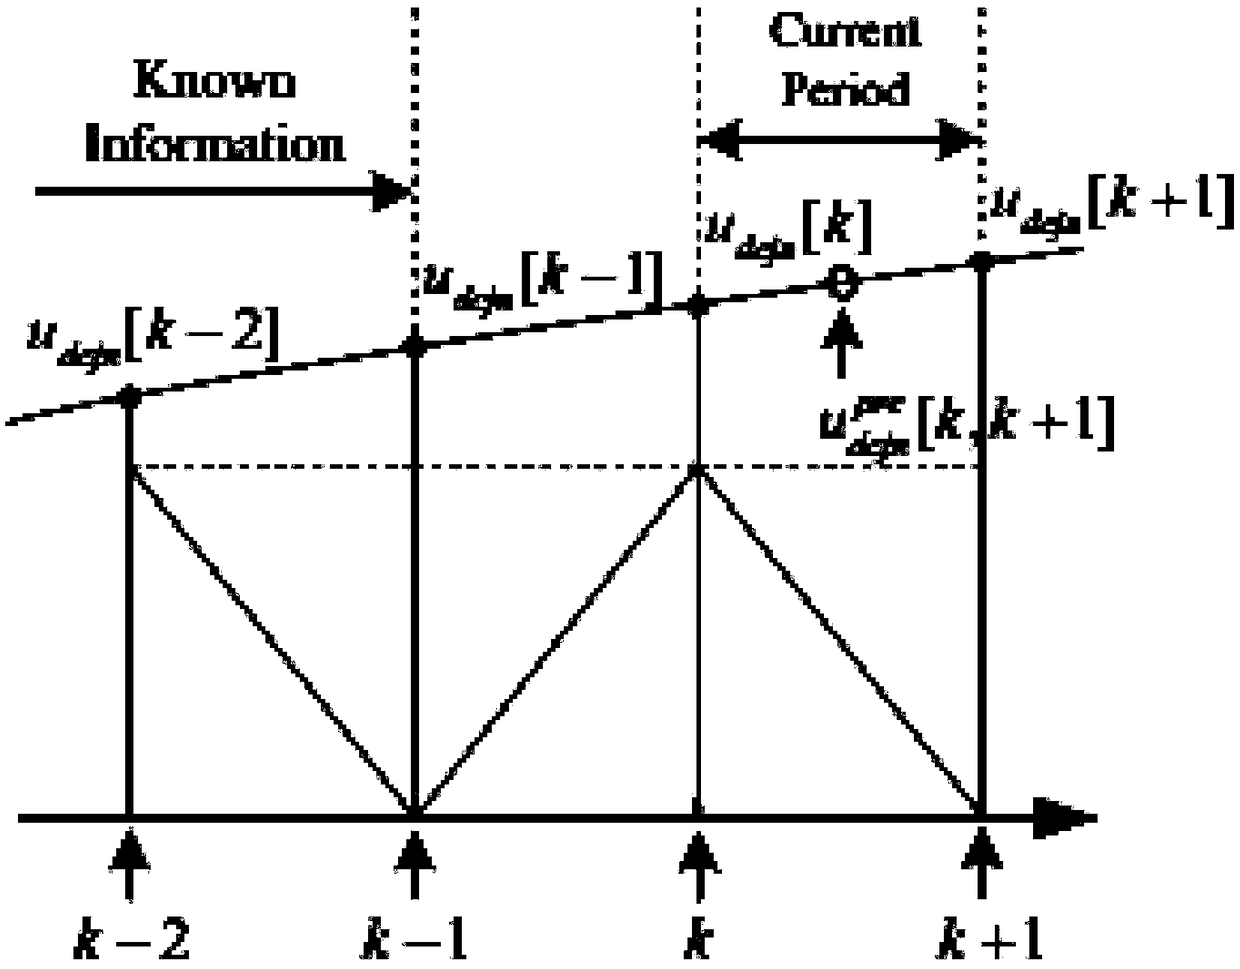 A Low-order Circulating Current Suppression Method for Modular Multilevel Converter